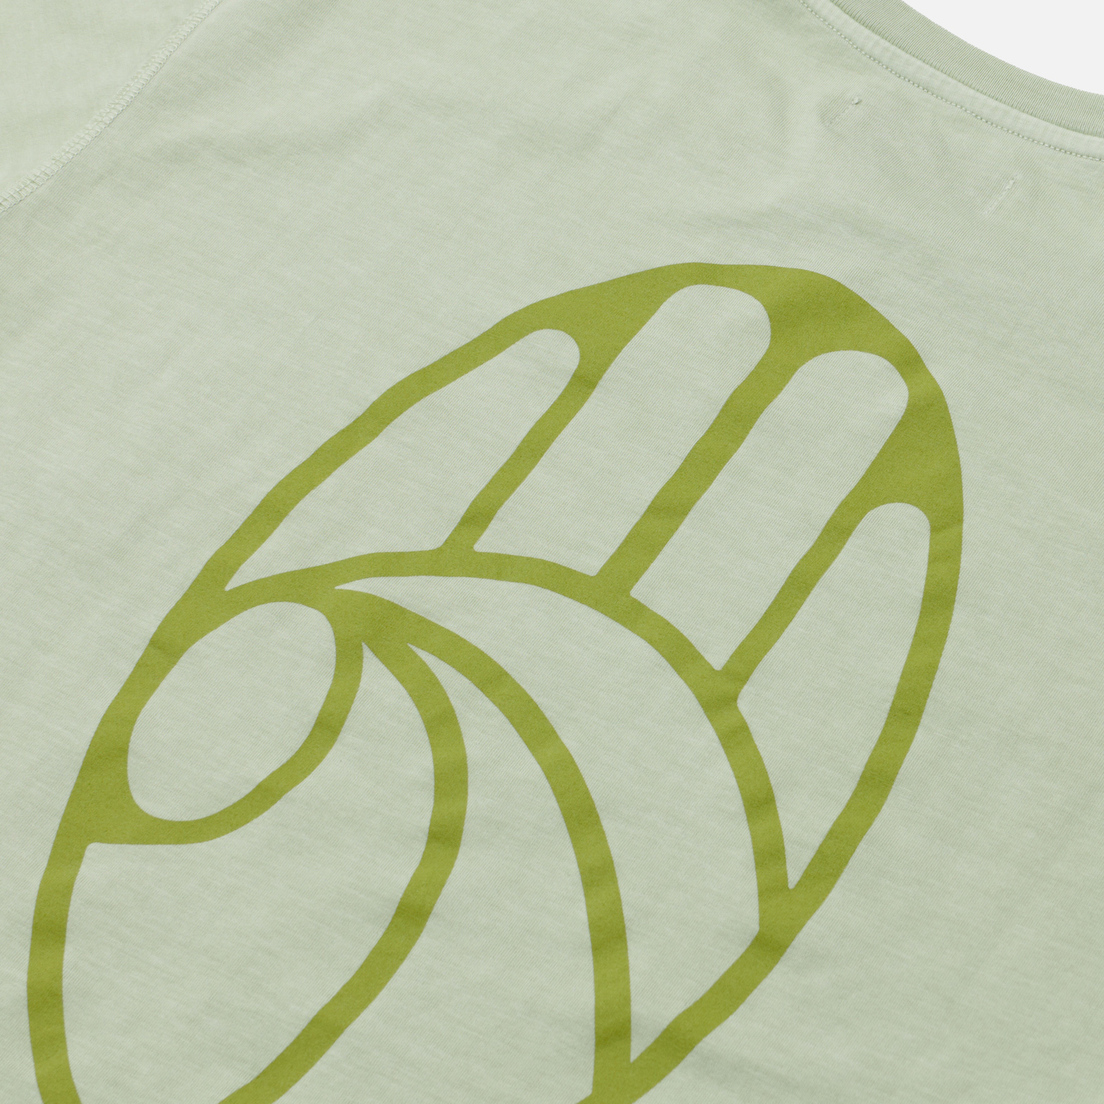 Left Hand Sportswear Мужская футболка Logo Print